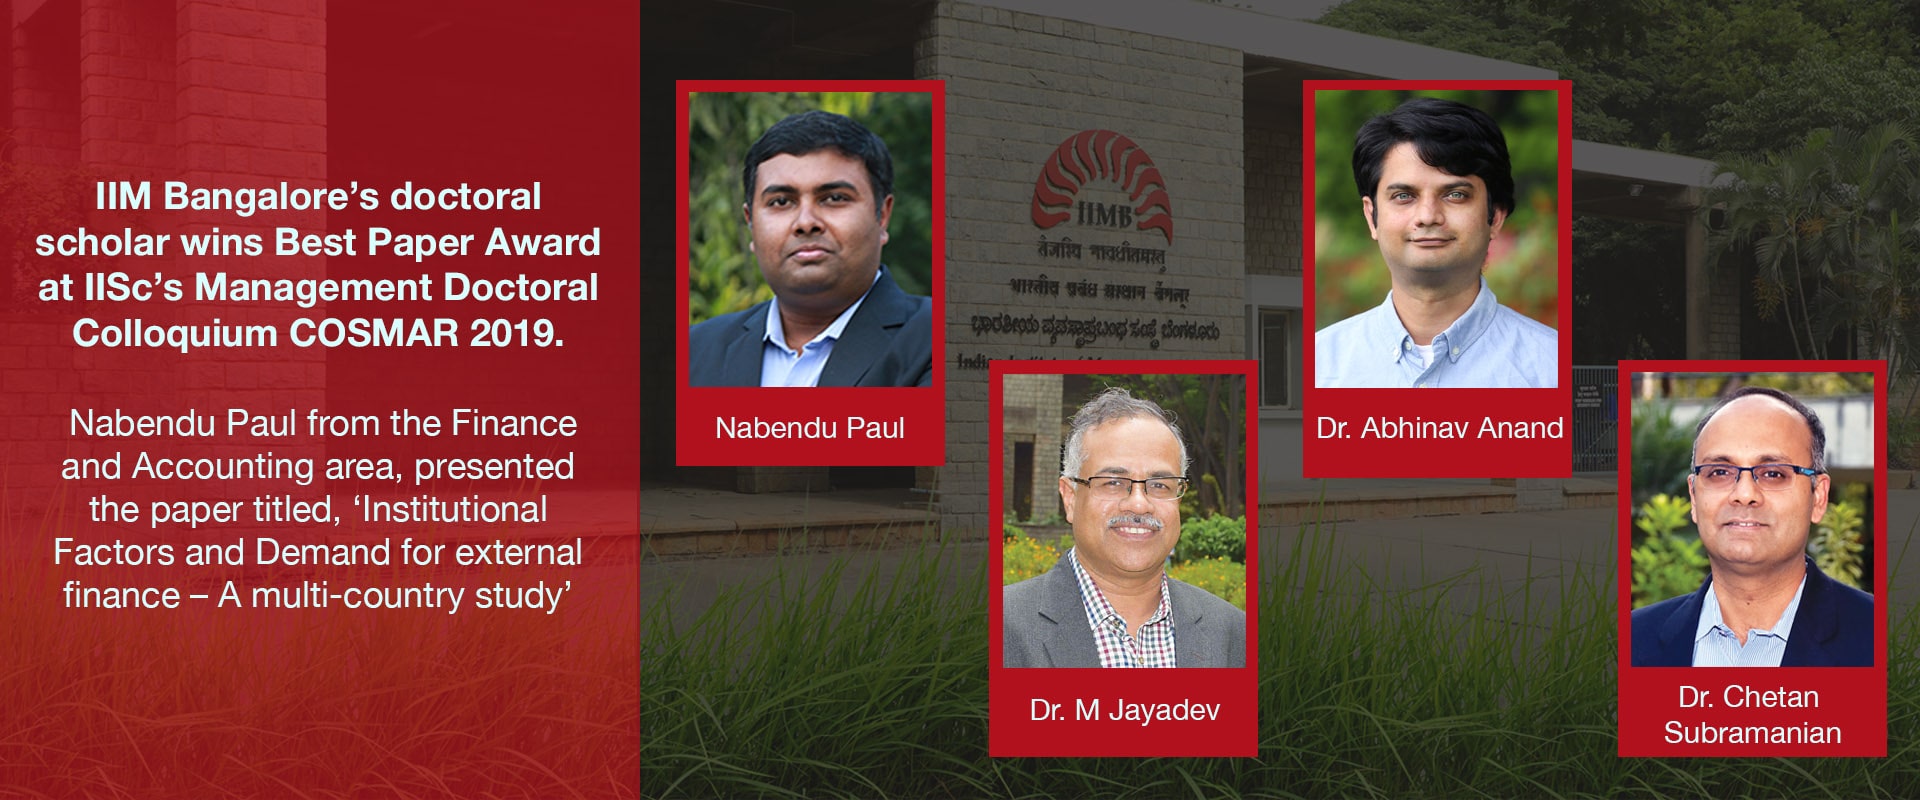 IIM Bangalore’s doctoral scholar wins Best Paper Award at IISc’s Management Doctoral Colloquium COSMAR 2019